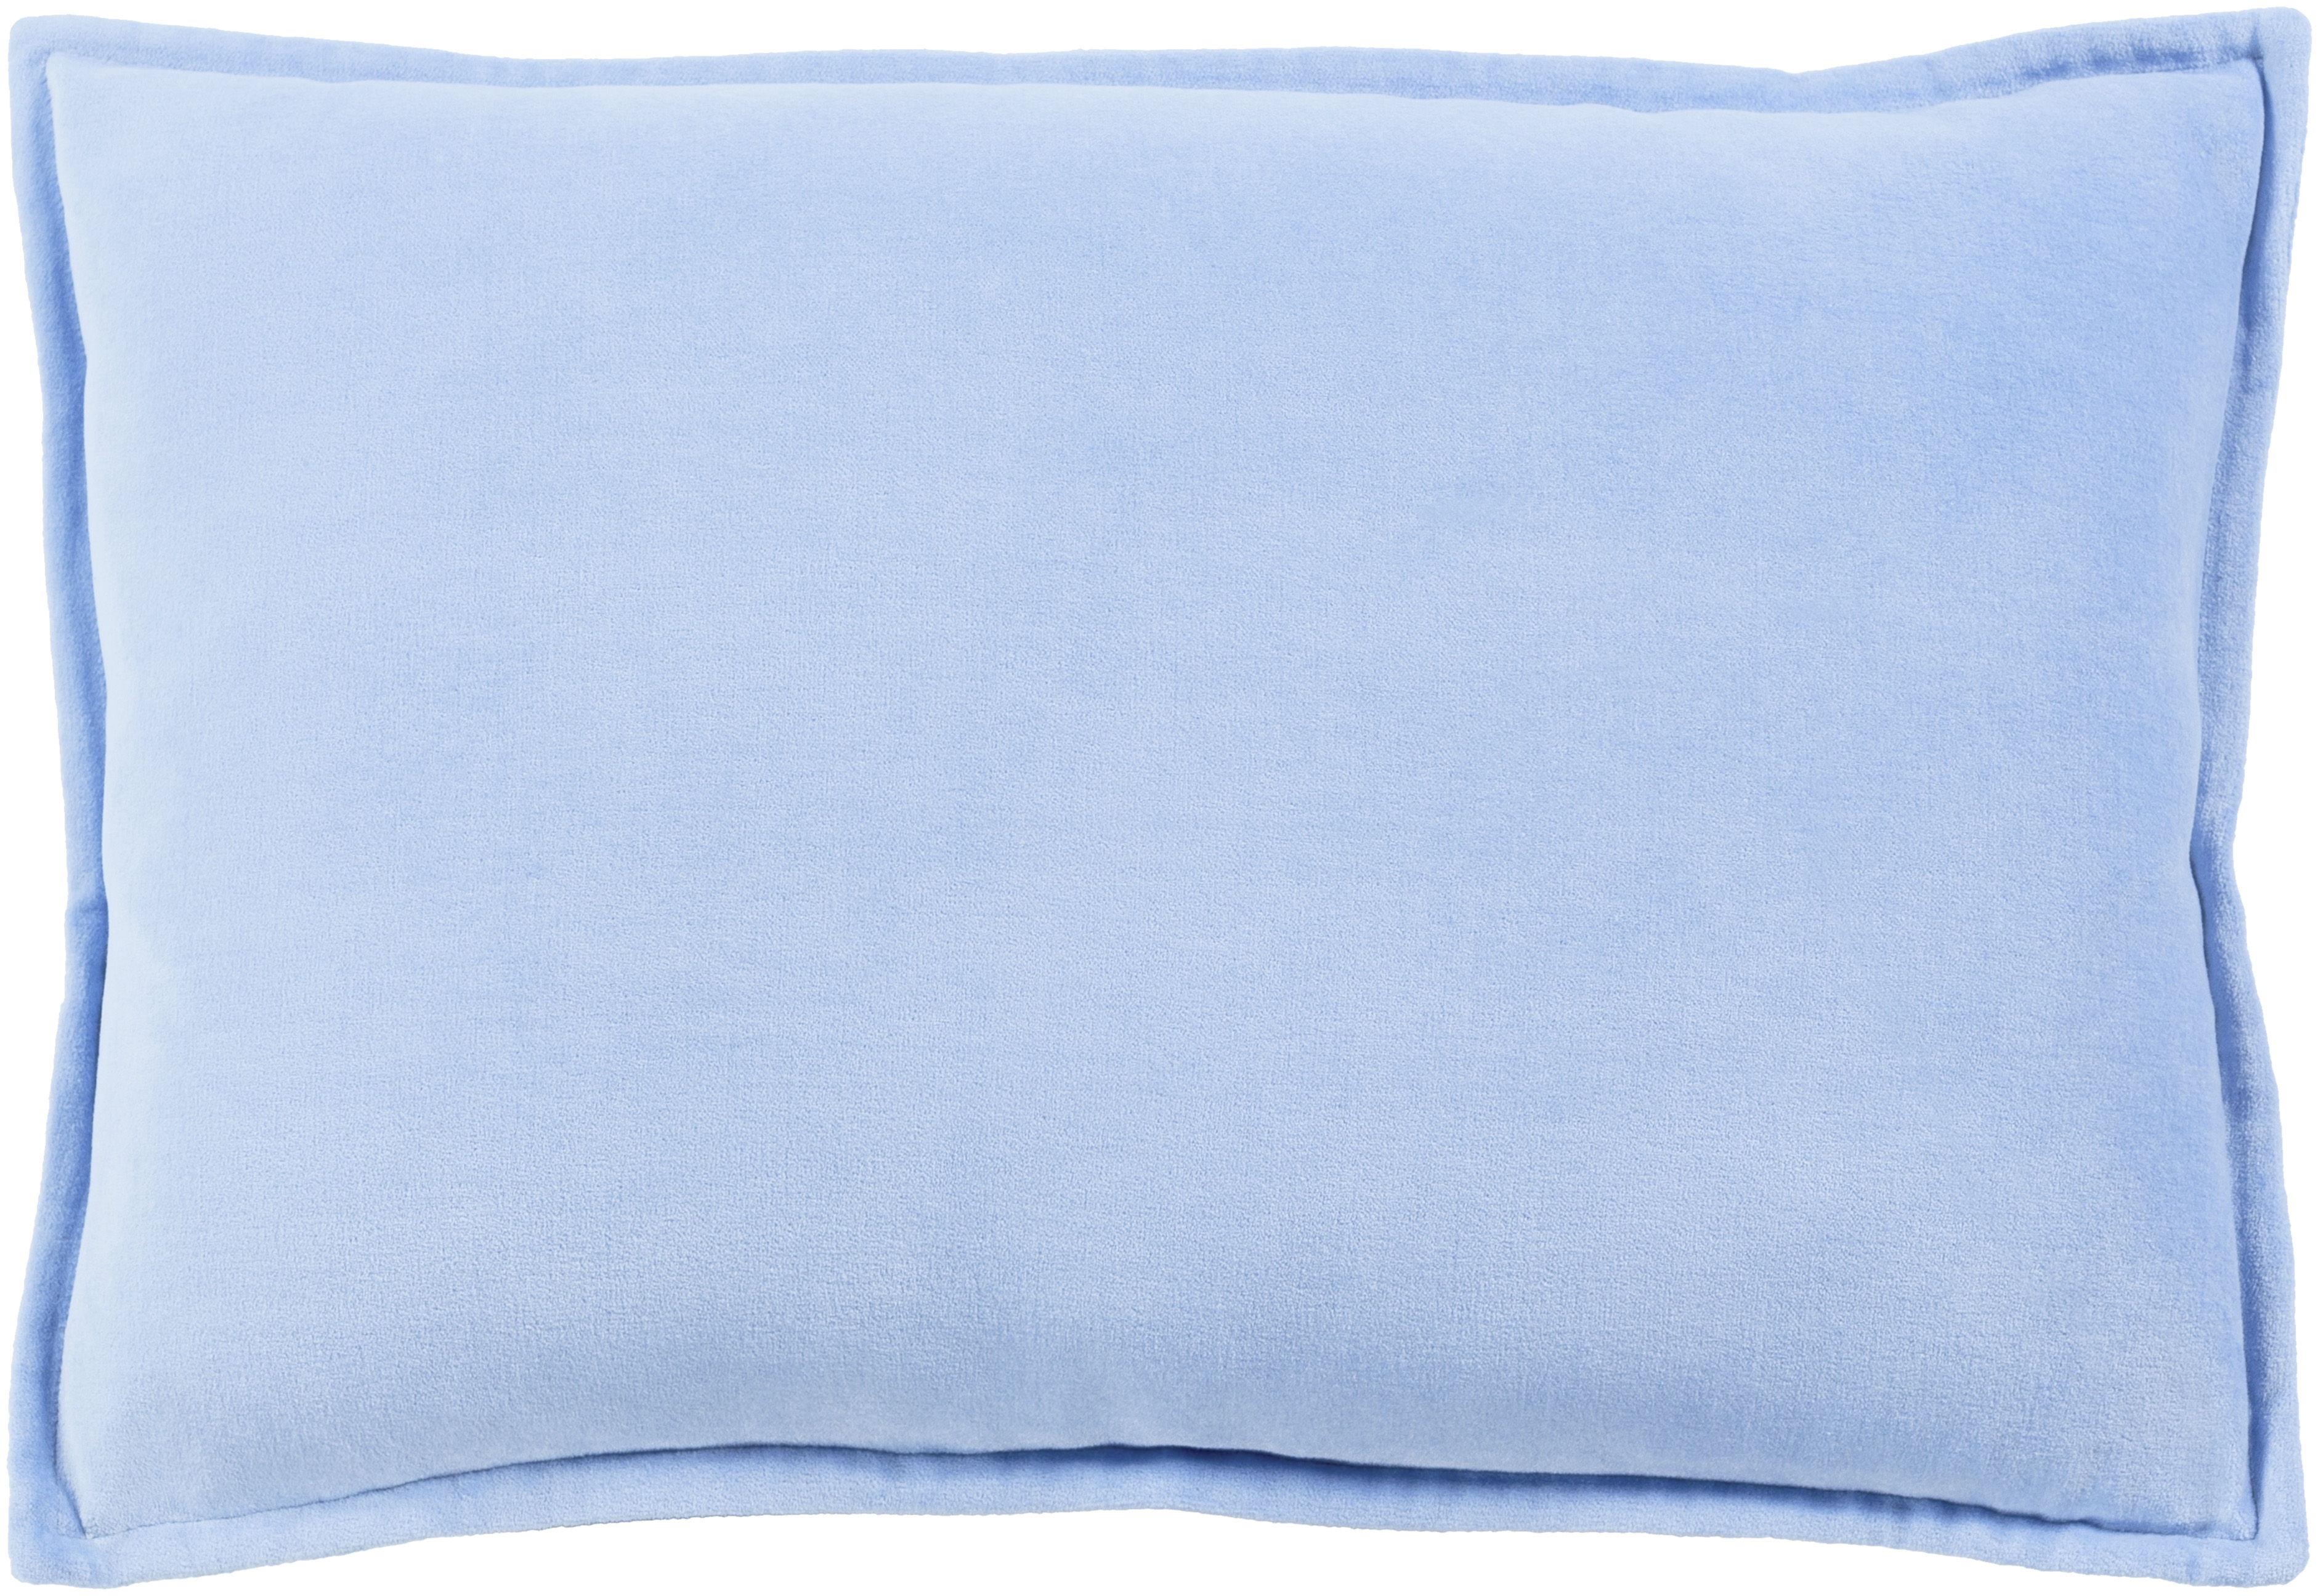 Cotton Velvet Throw Pillow, 20" x 20", pillow cover only - Image 1